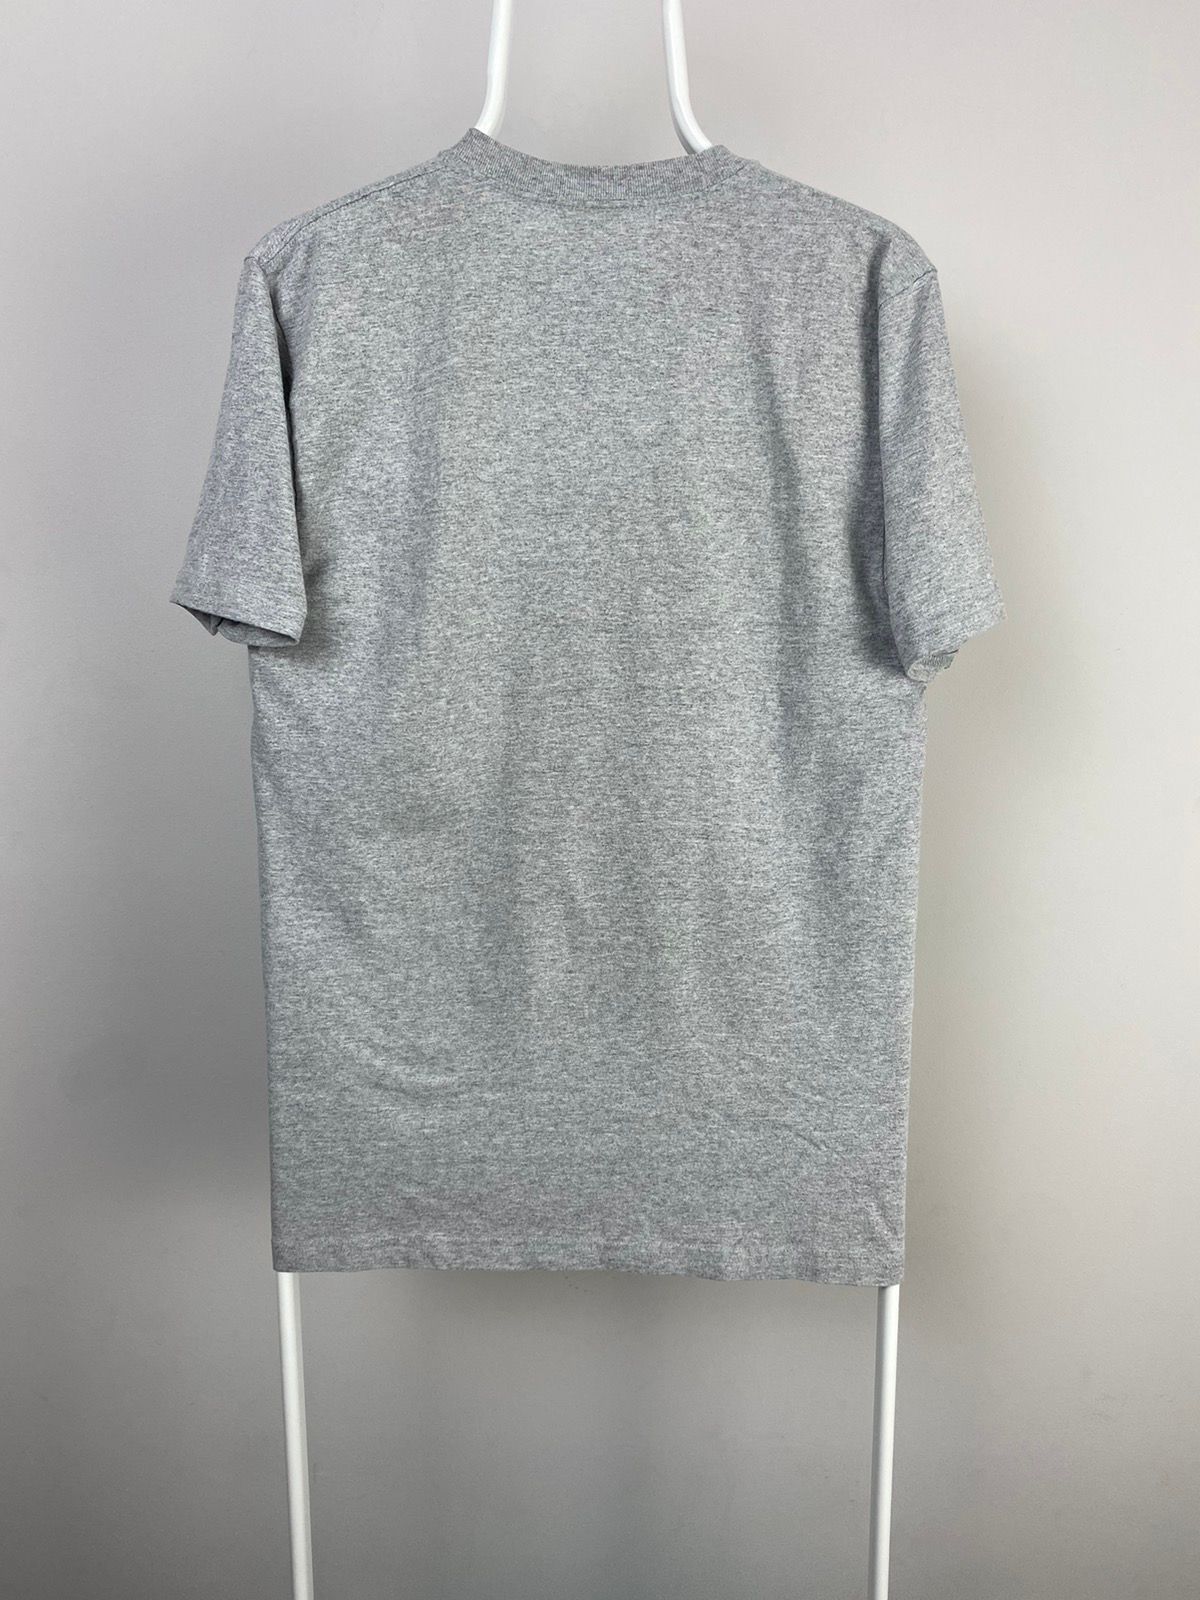 Supreme 2015 Supreme Undercover Synhead Tee Shirt Grey Medium Size US M / EU 48-50 / 2 - 8 Preview